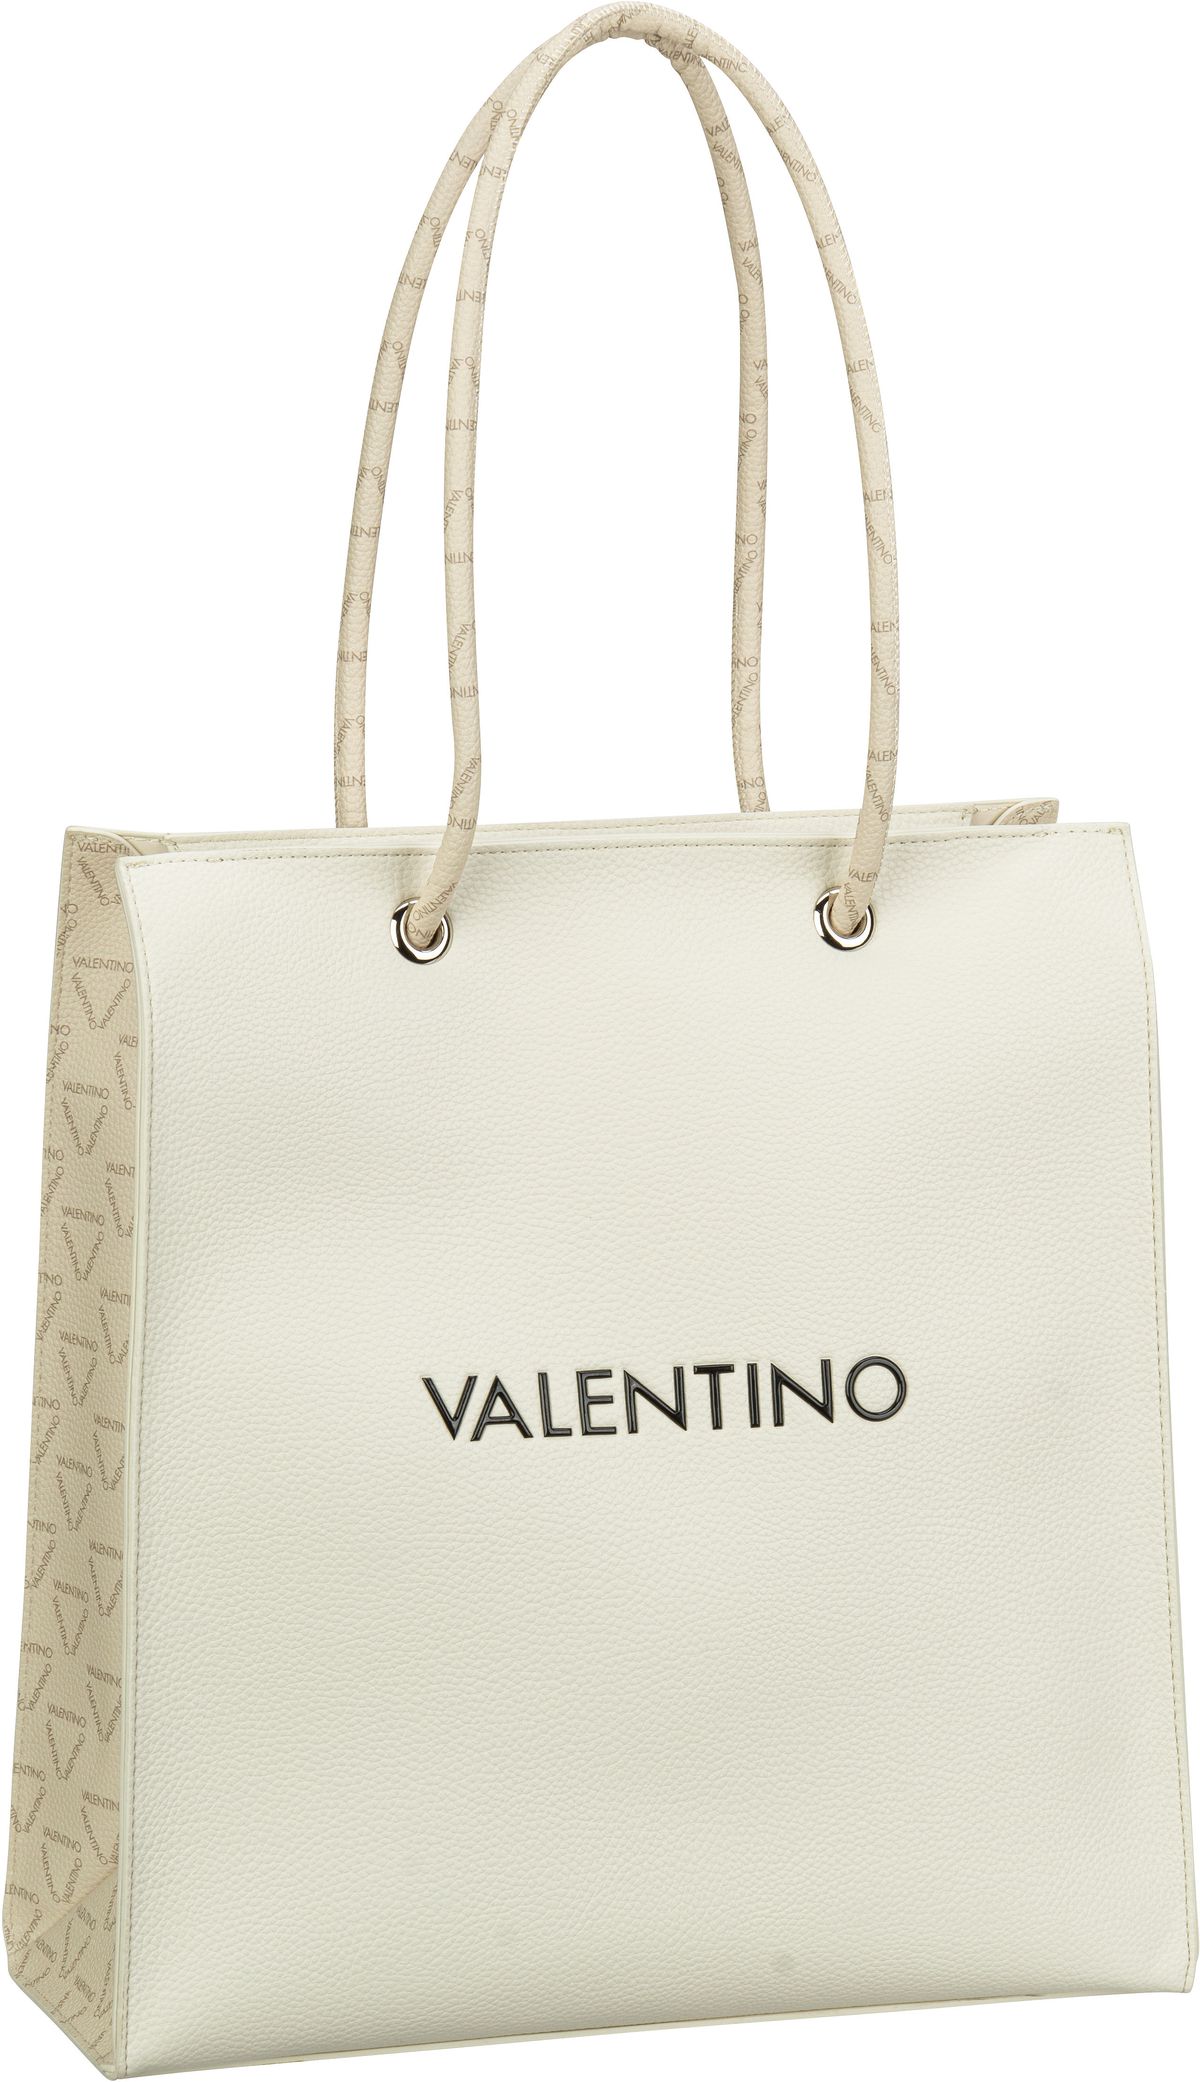 Valentino Jelly Shopping W01 - Off White/Multicolor